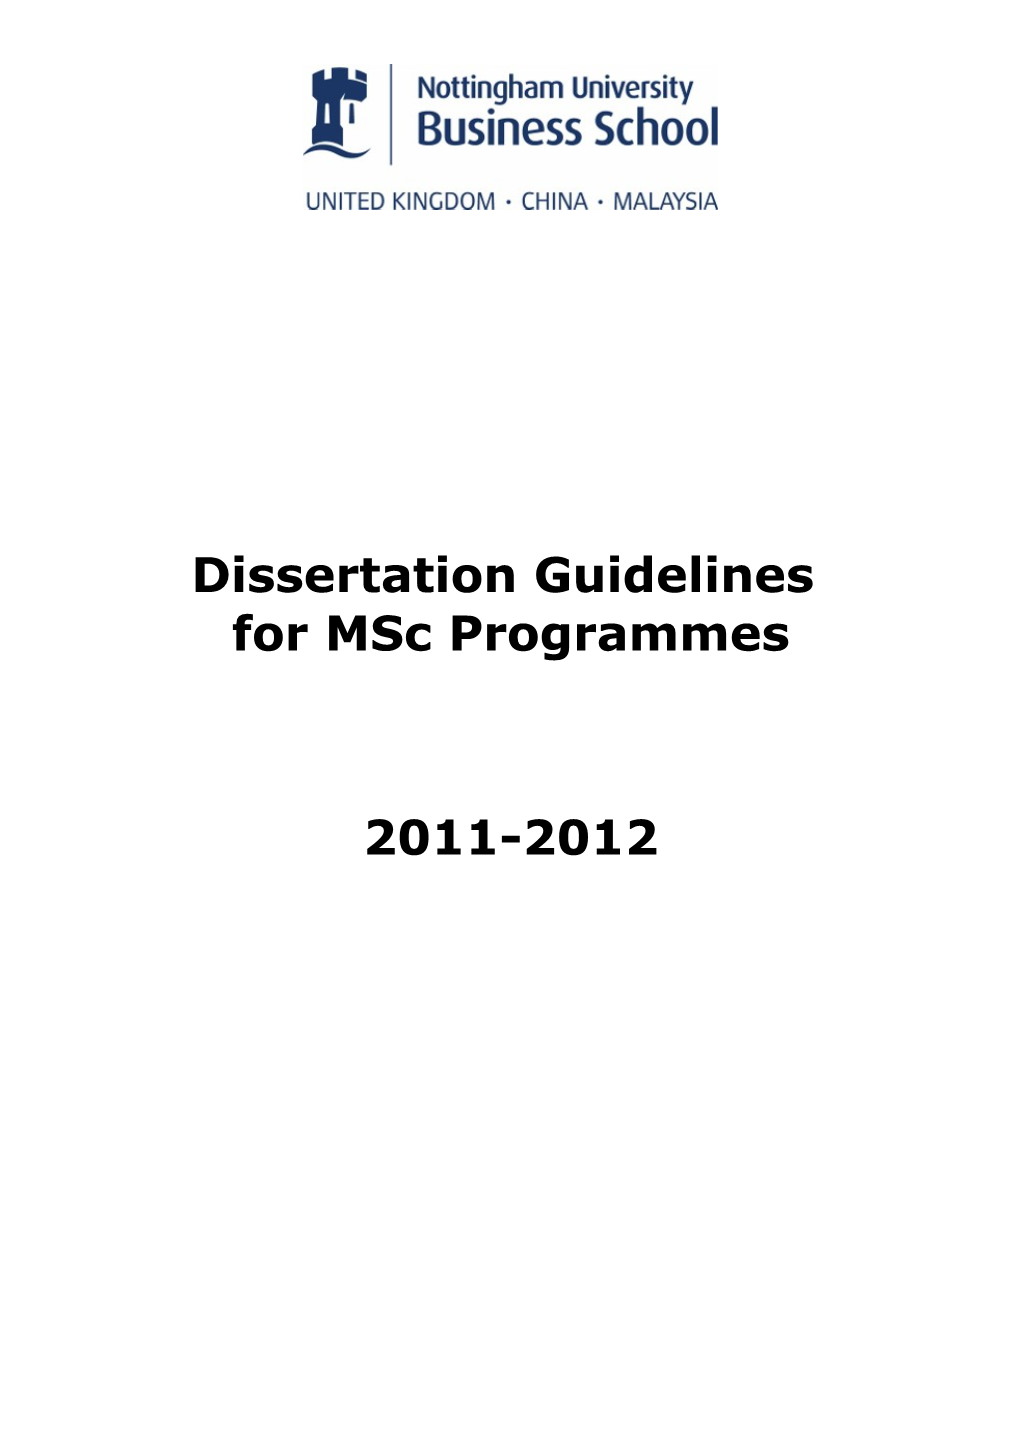 Revised Dissertation Guidelines